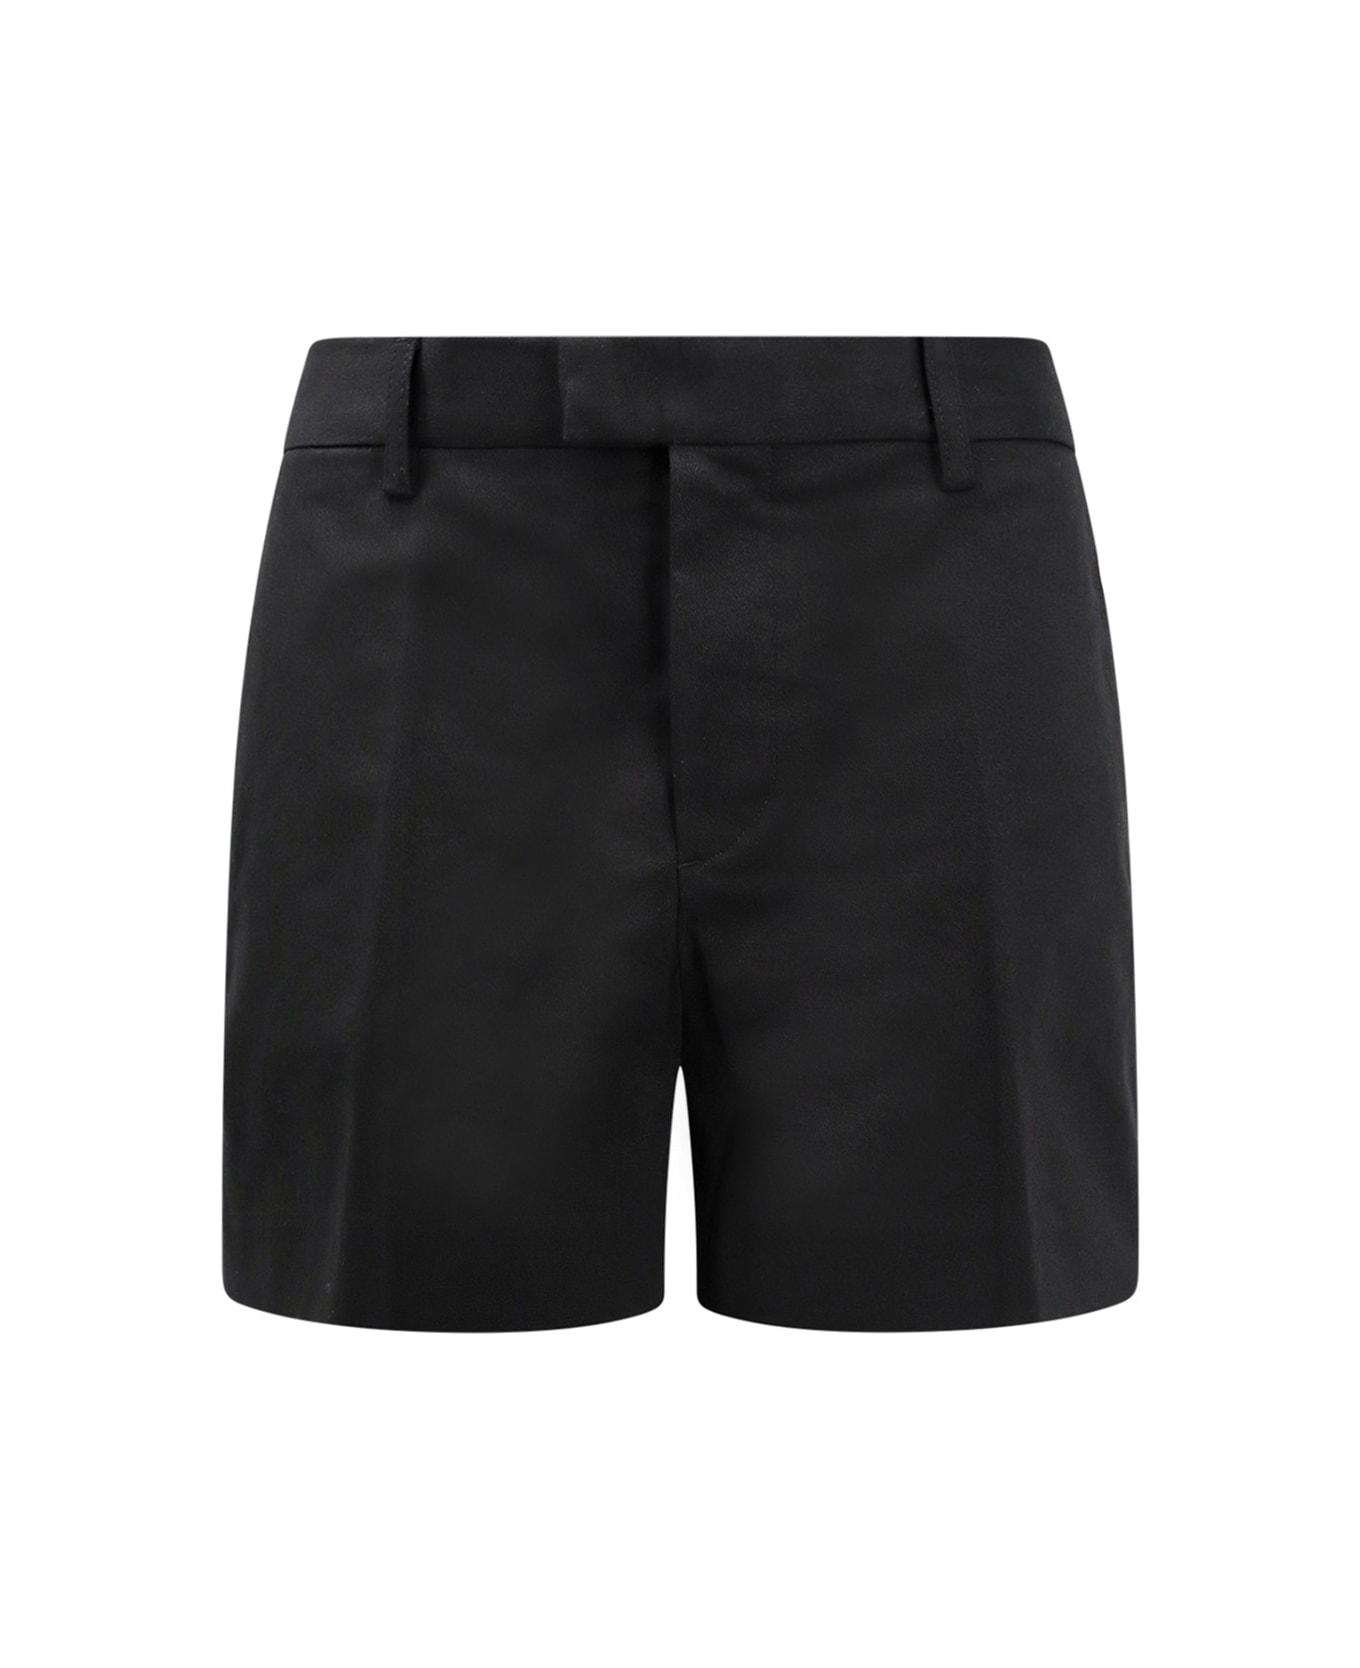 Closed Shorts - Black